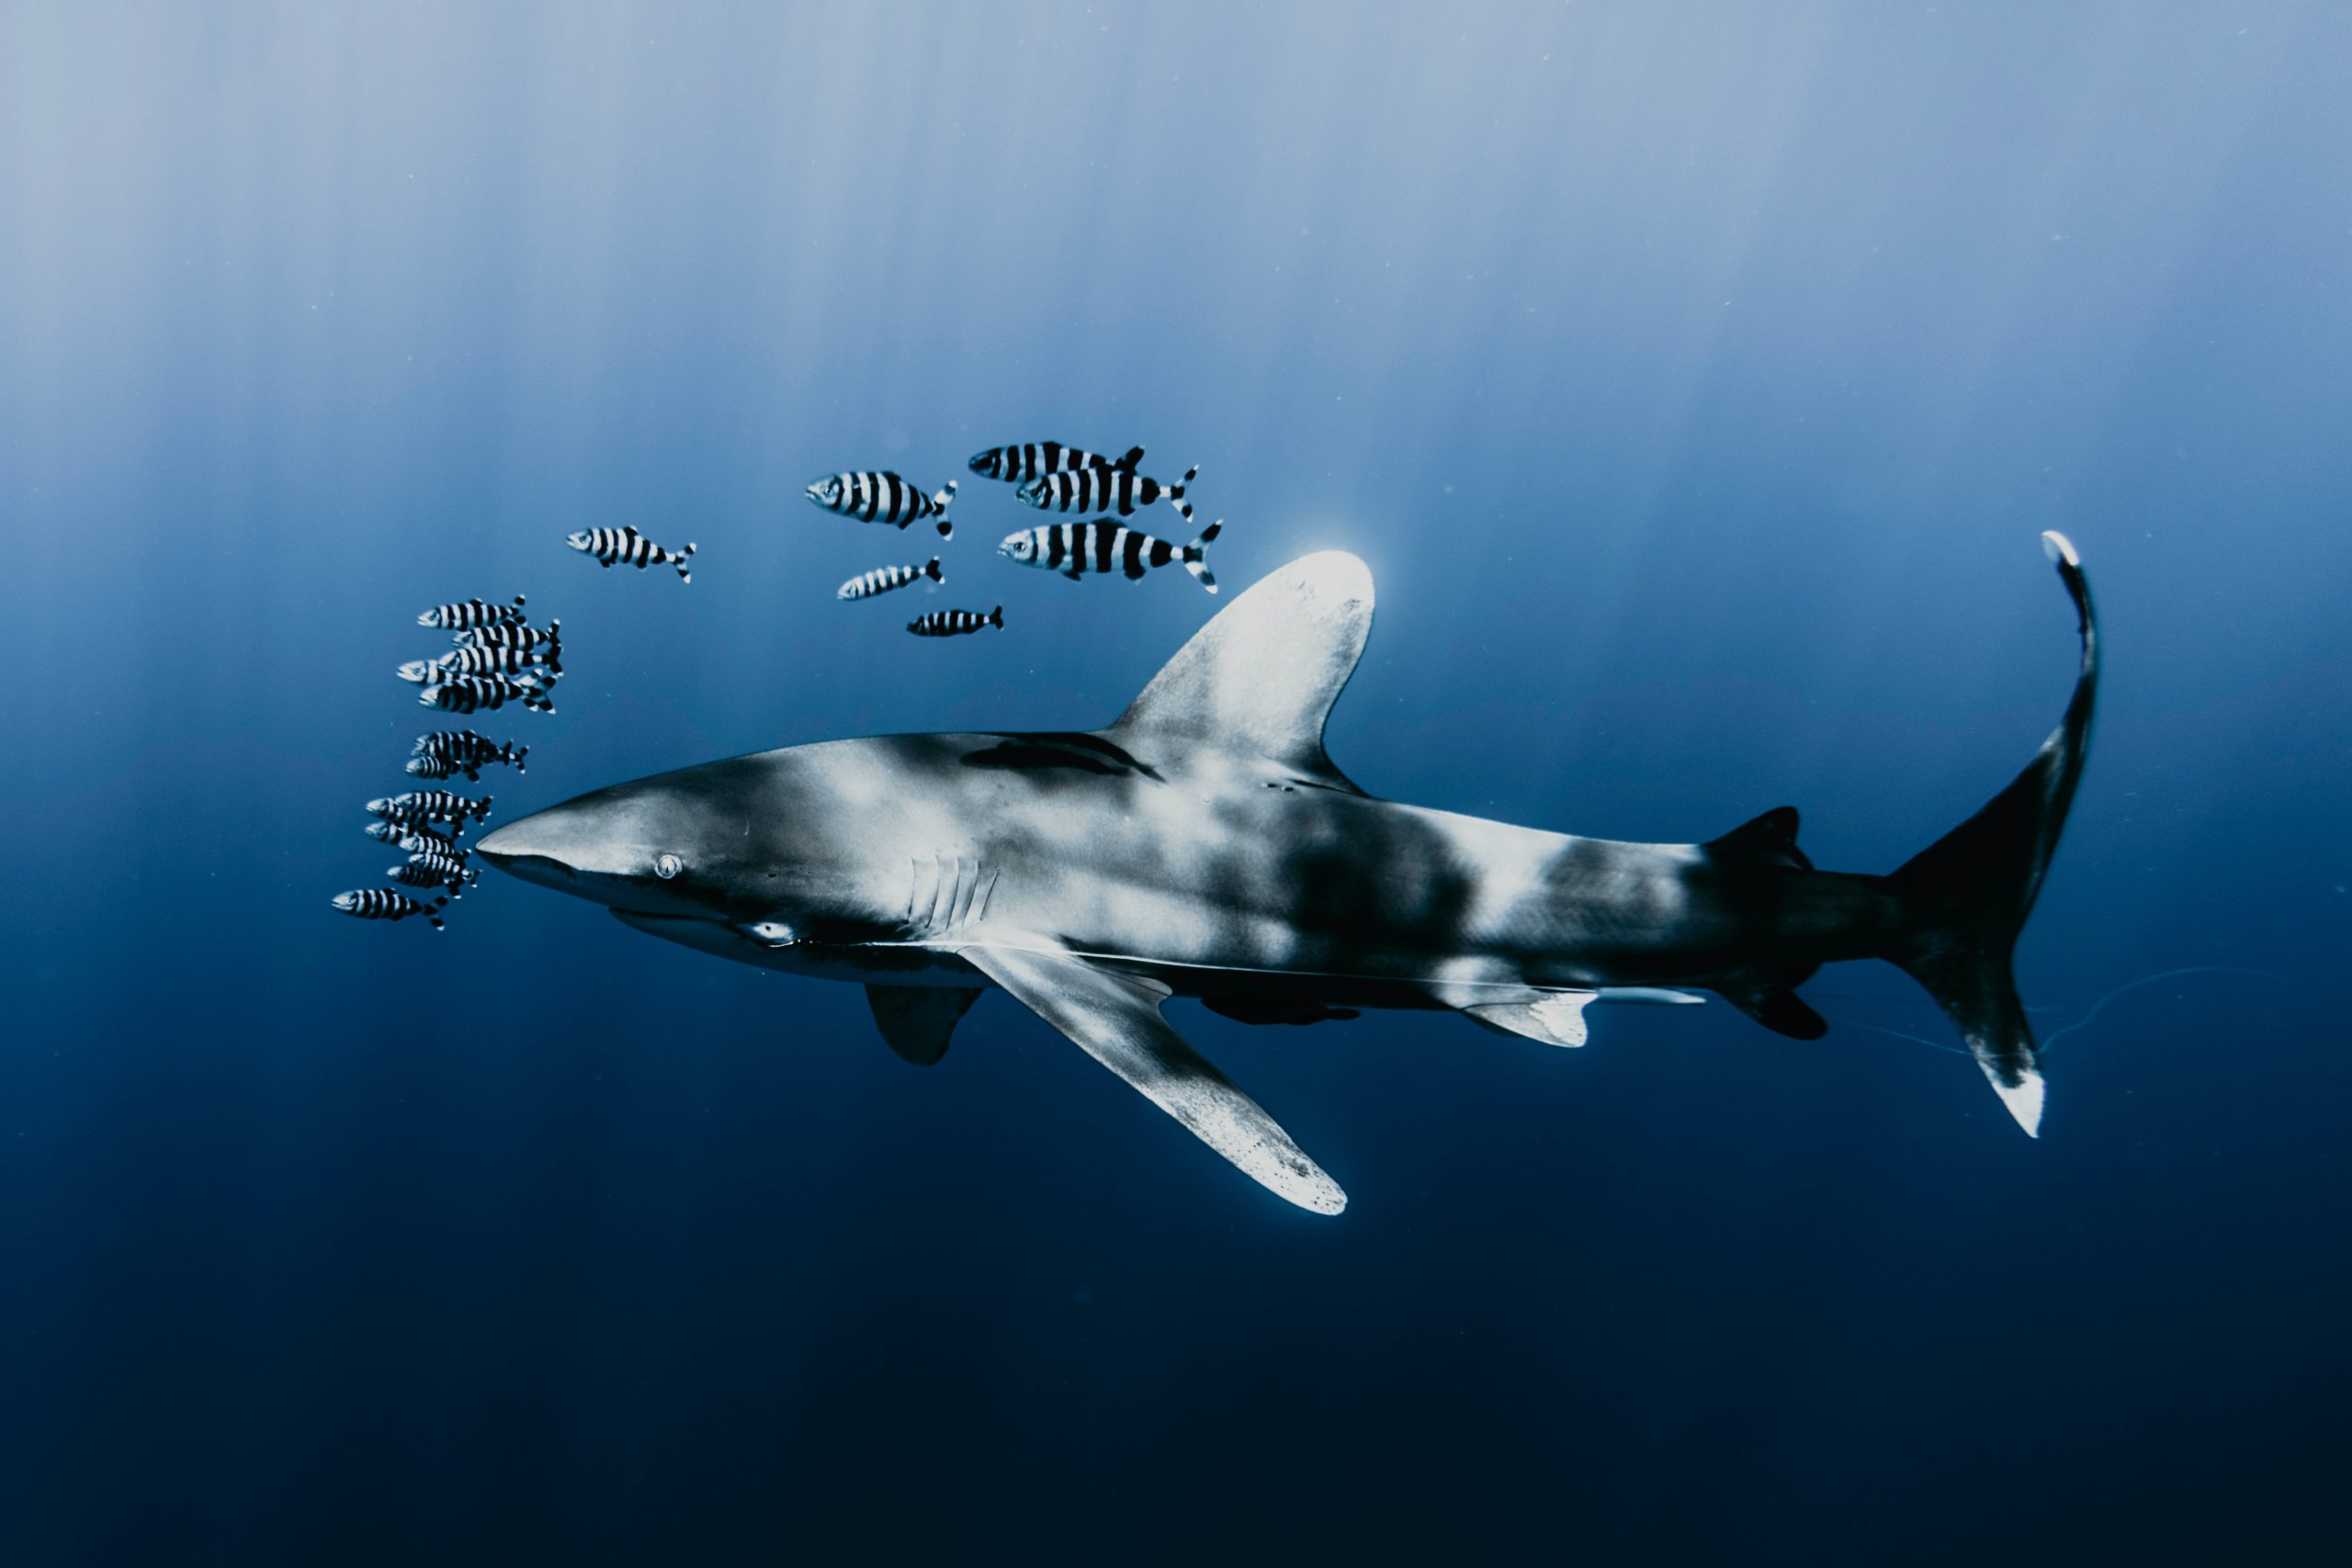 Adriatic sharks threatened with extinction, image of shark